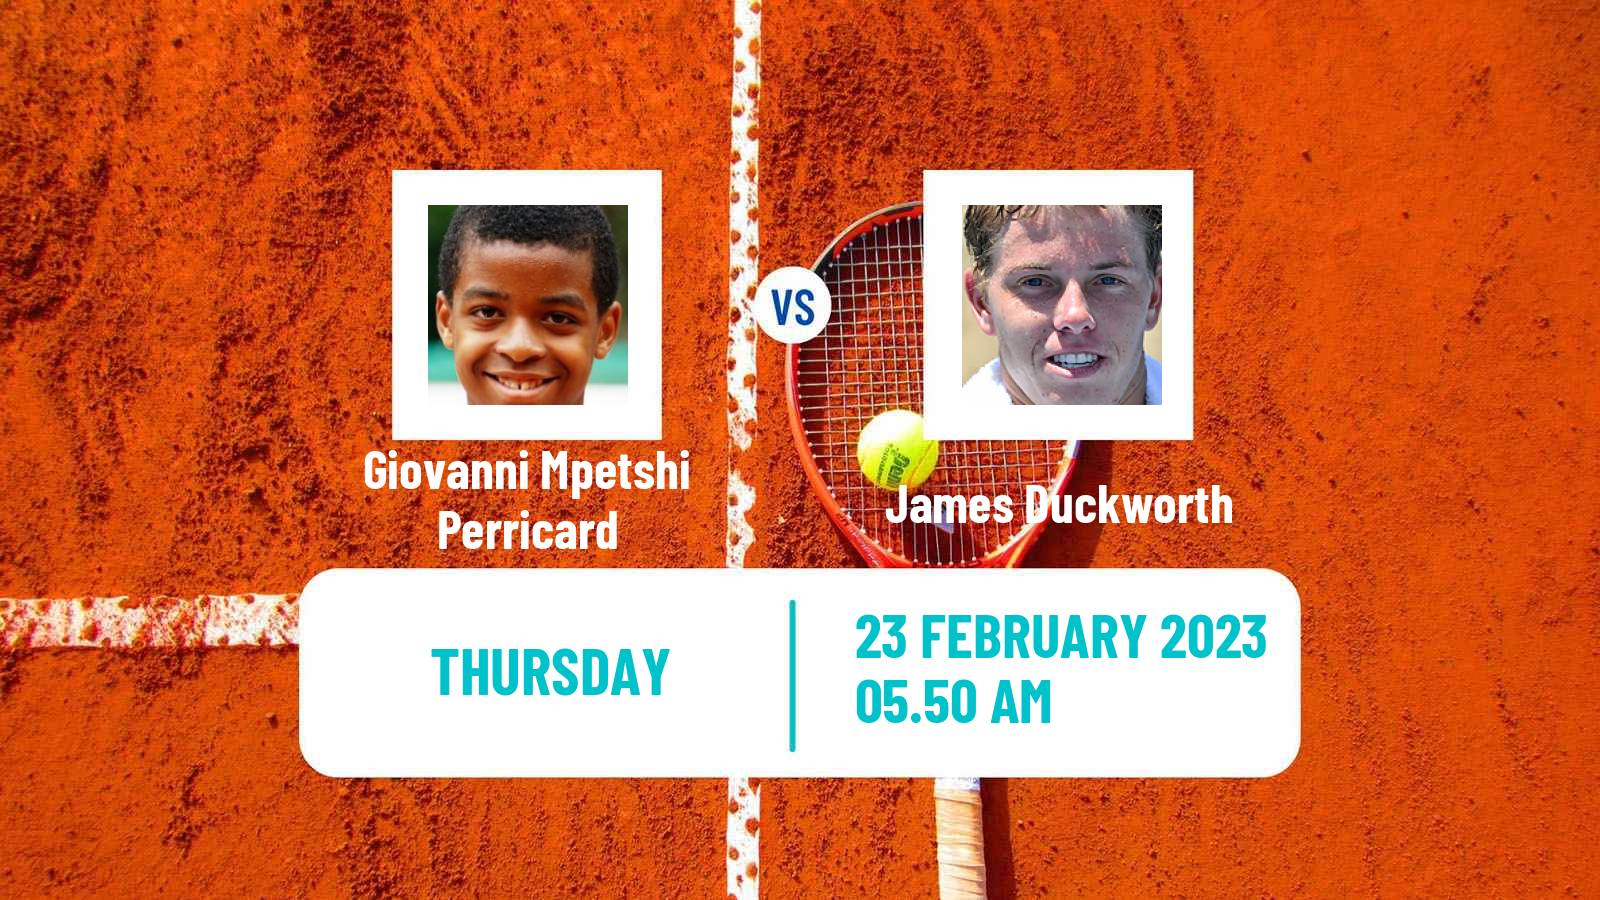 Tennis ATP Challenger Giovanni Mpetshi Perricard - James Duckworth